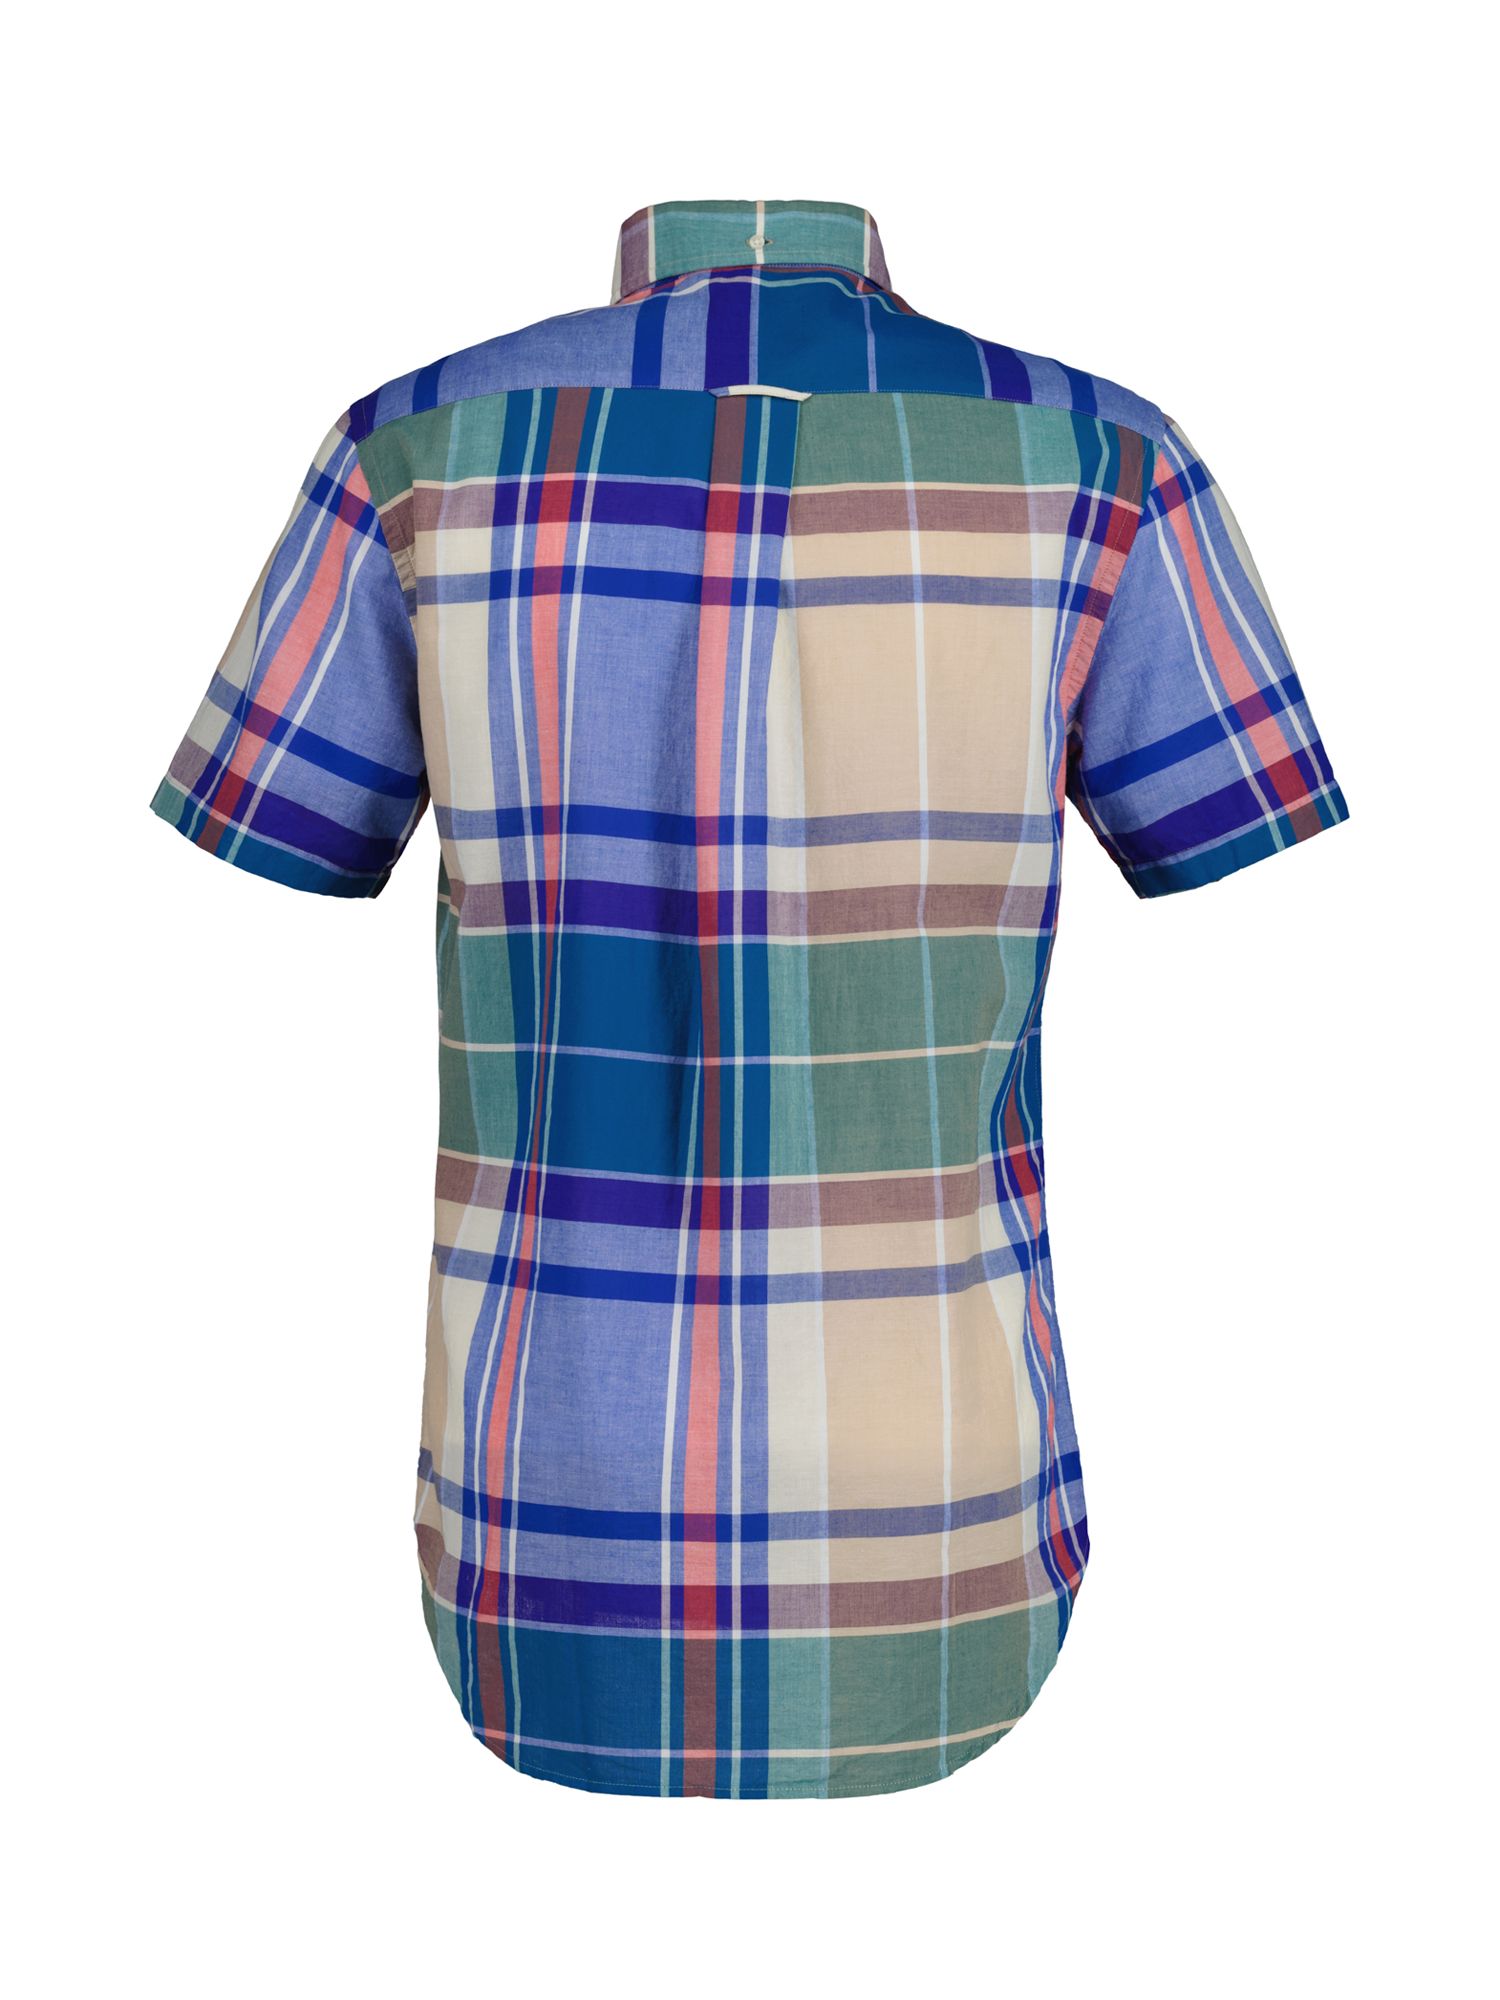 GANT Madras Short Sleeve Shirt, Blue/Multi, M